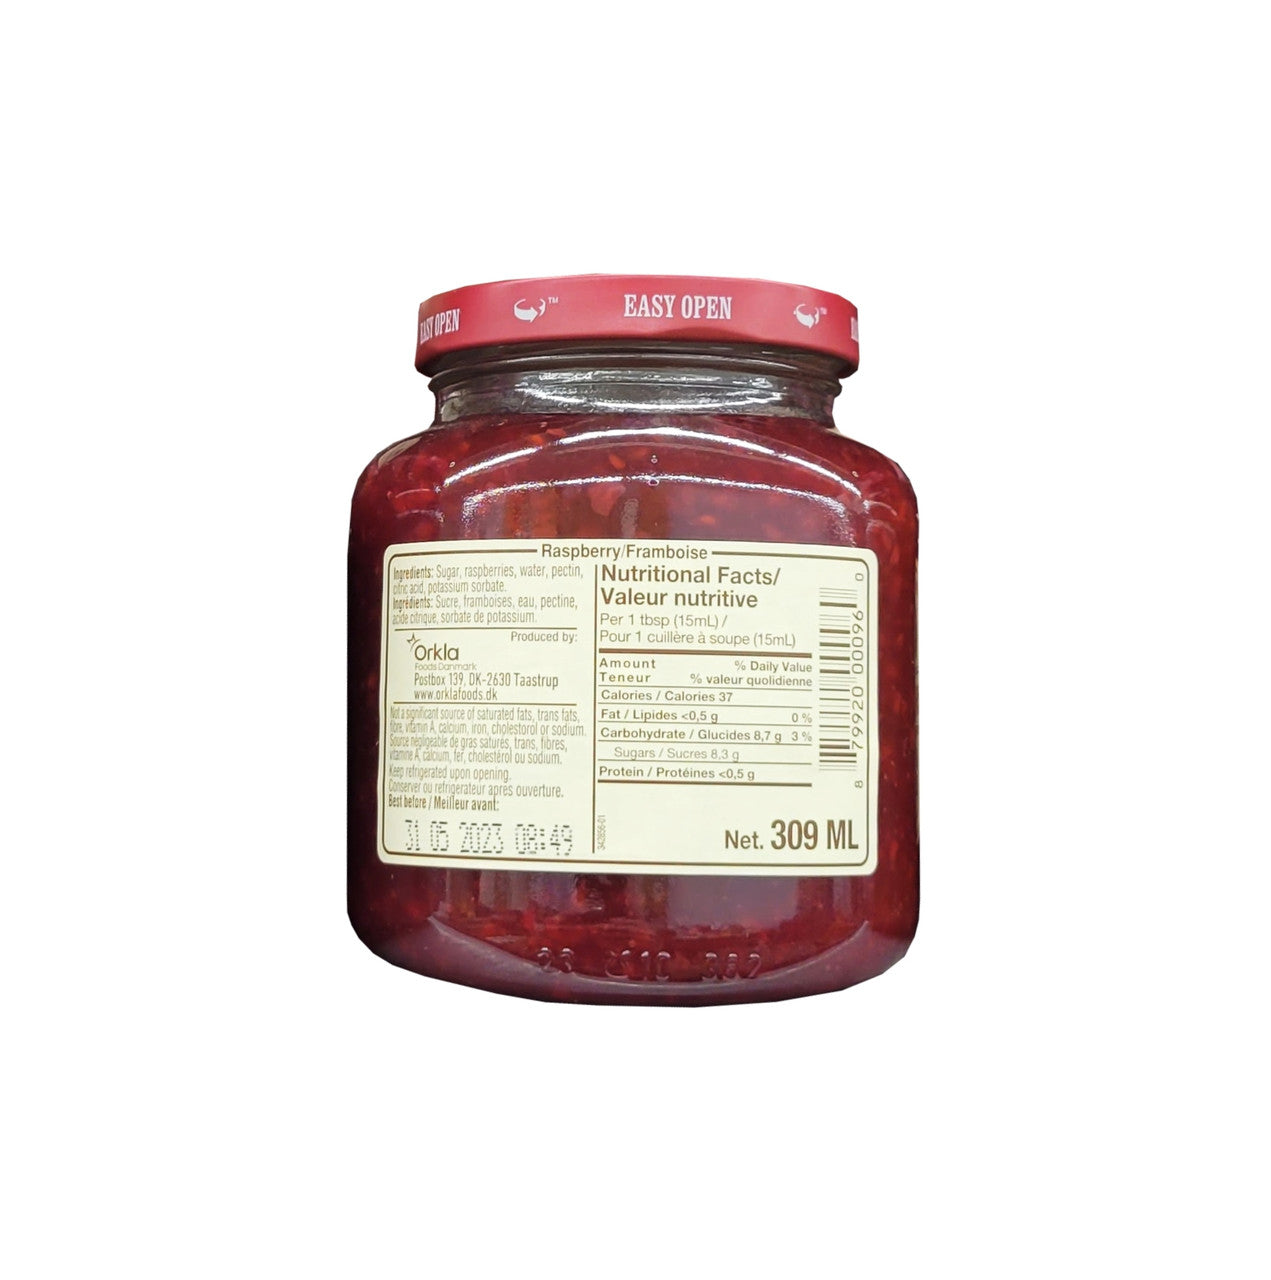 Kraft Raspberry Jam, 500 ML Jar 